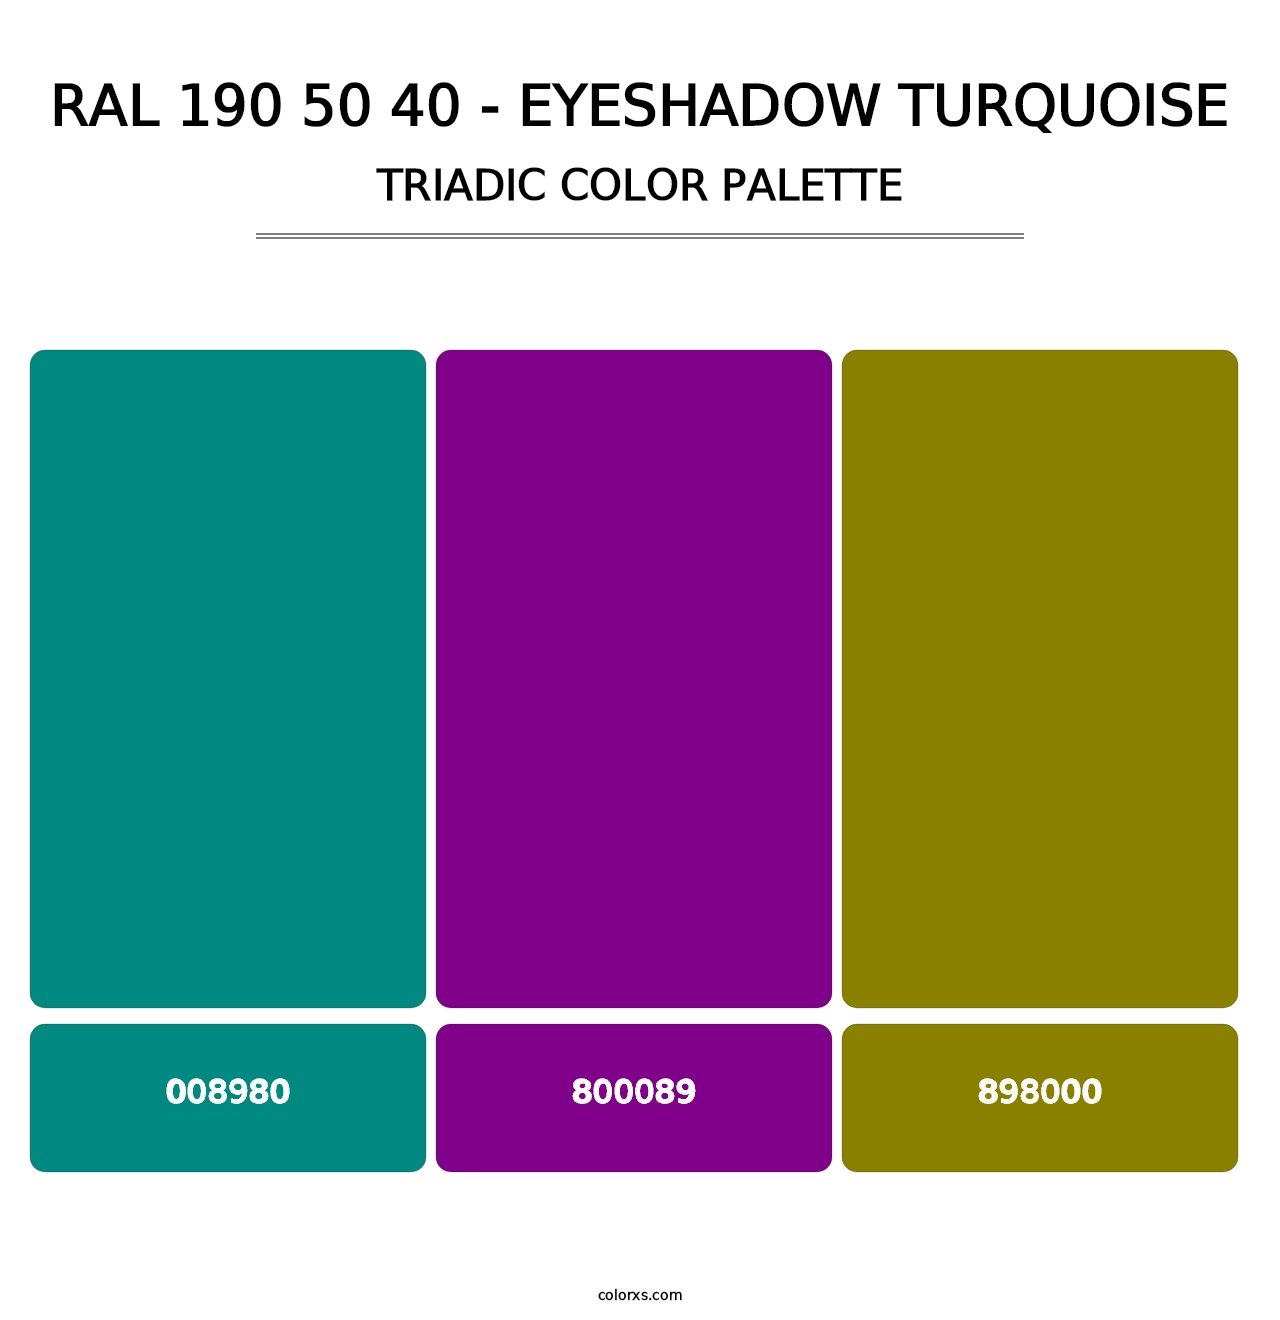 RAL 190 50 40 - Eyeshadow Turquoise - Triadic Color Palette